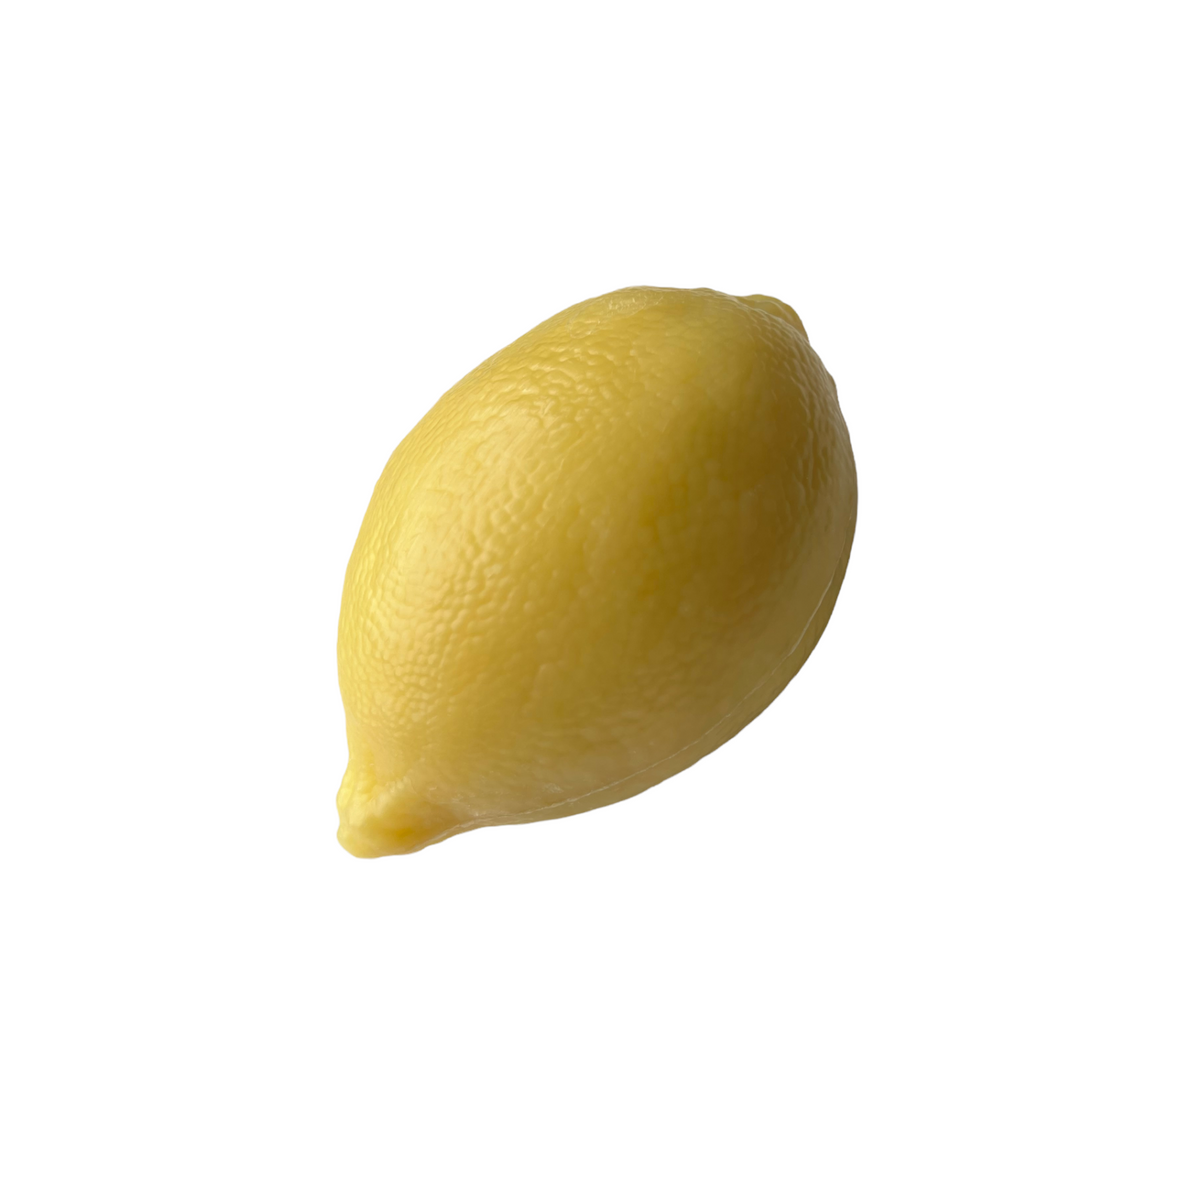 125g Lemon / Citron Shape French Soap Bar